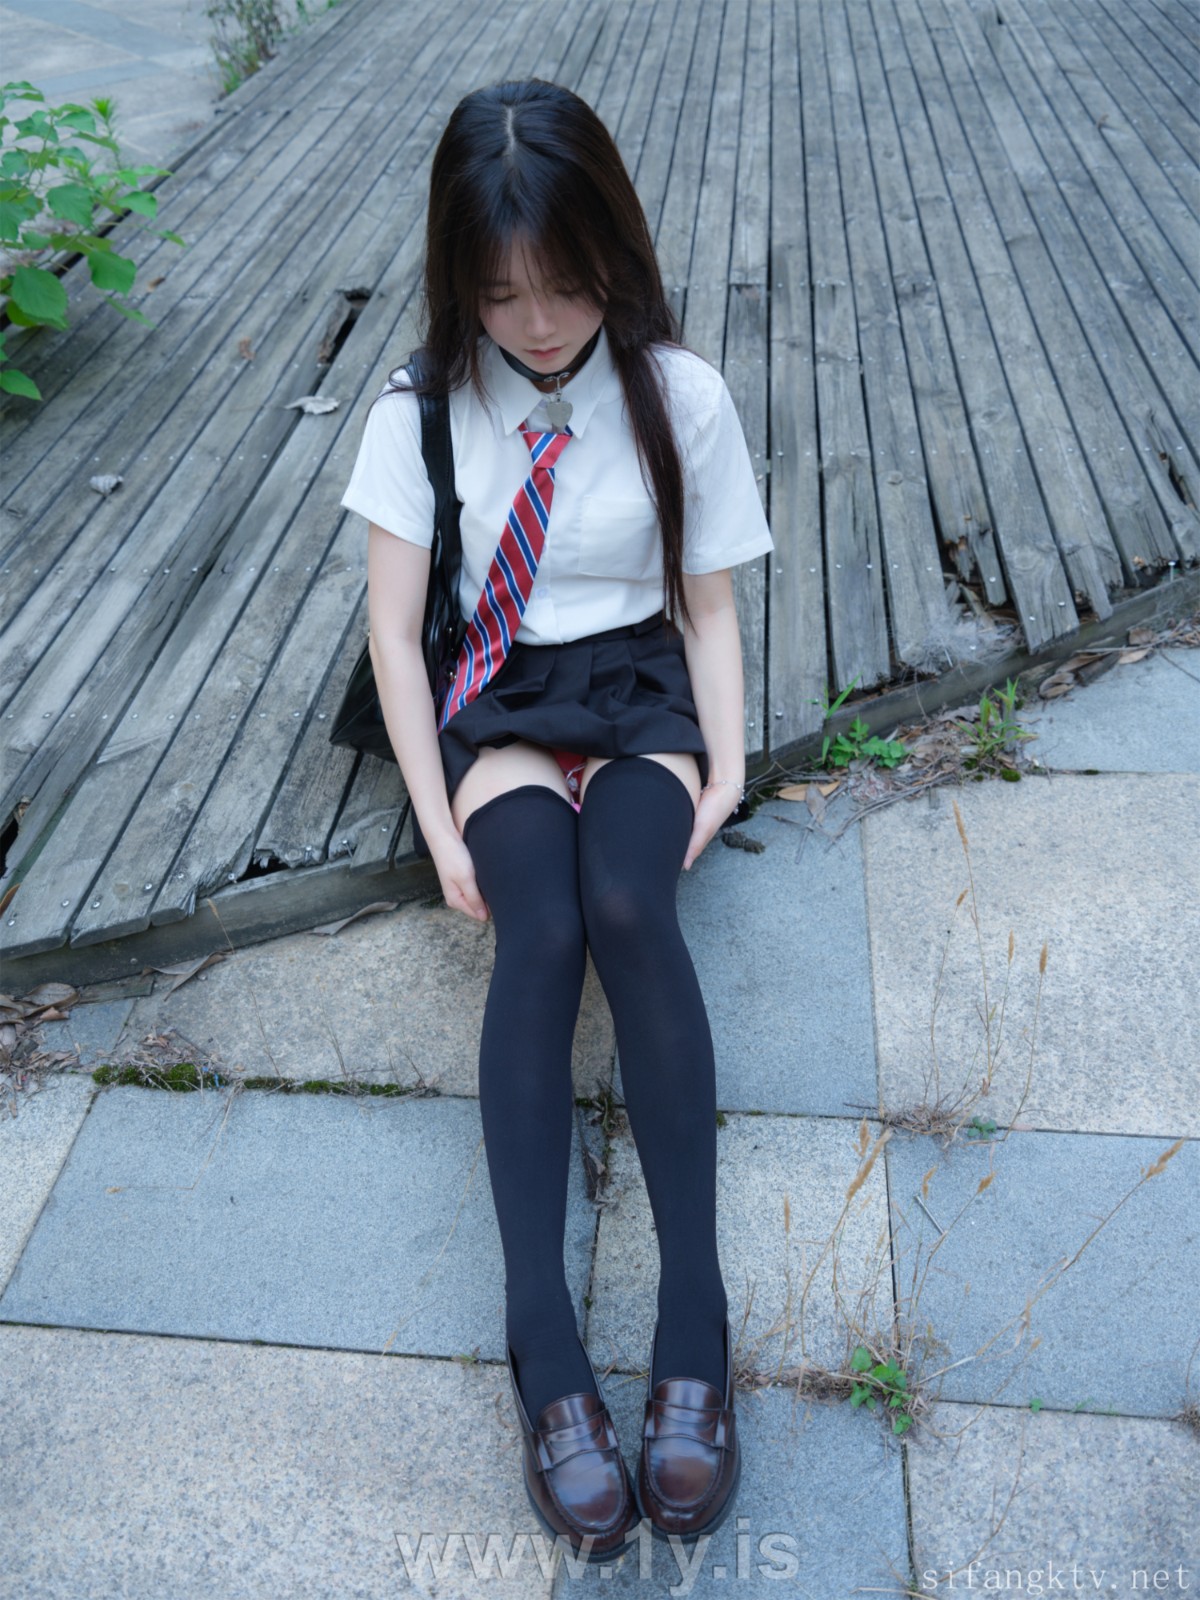 The Tender girl in black stockings Outdoor Exposure-1 (7)